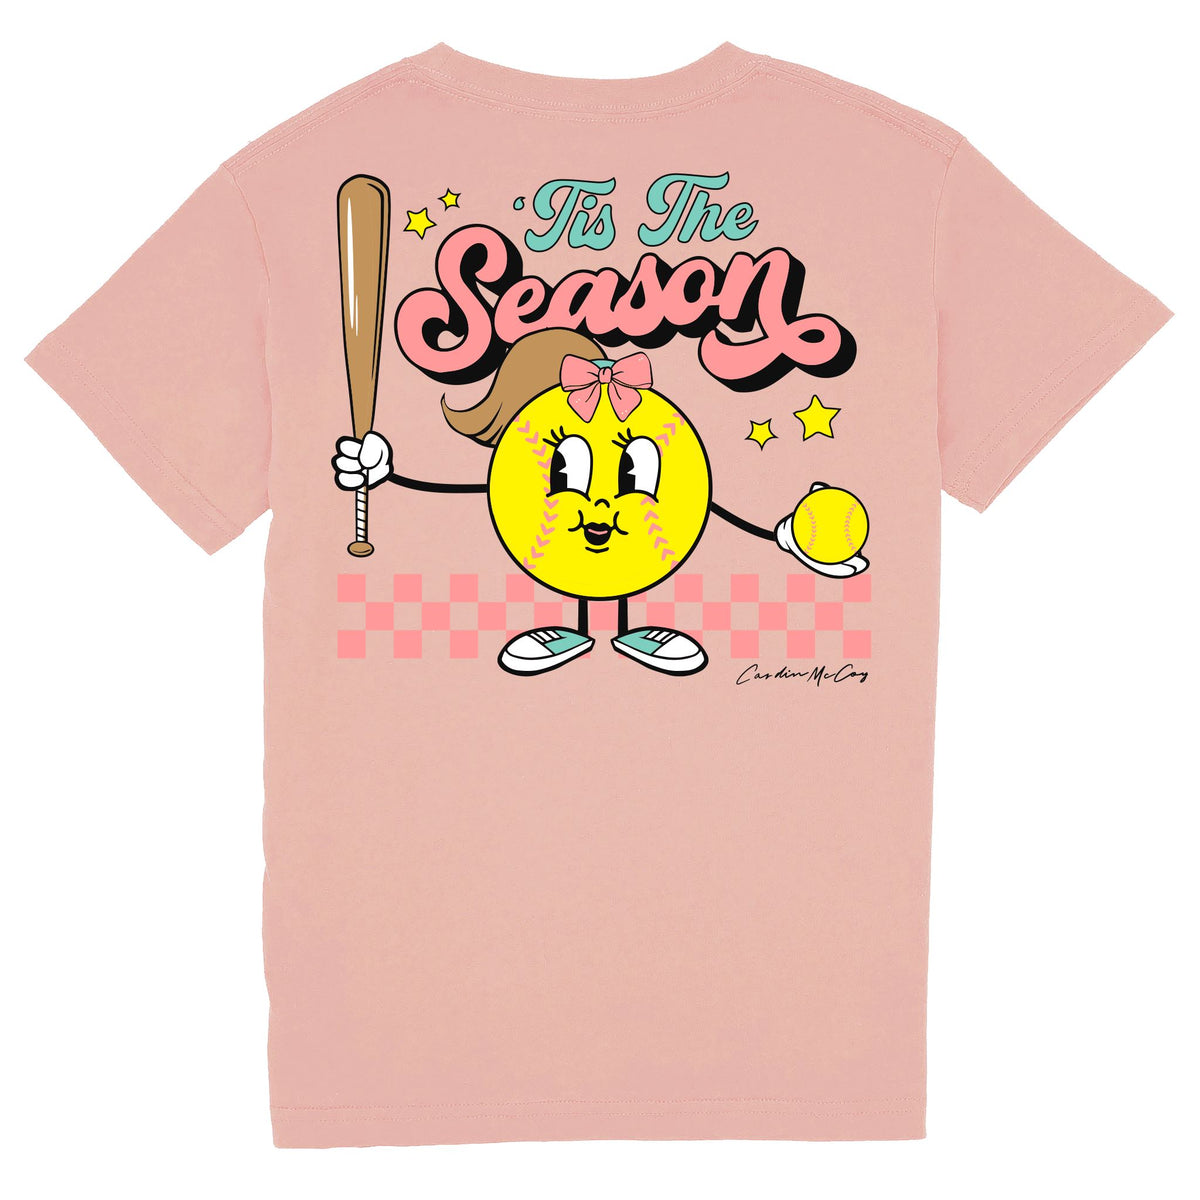 Kids' Tis the Season Softball Short Sleeve Pocket Tee Short Sleeve T-Shirt Cardin McCoy Rose Tan XXS (2/3) 